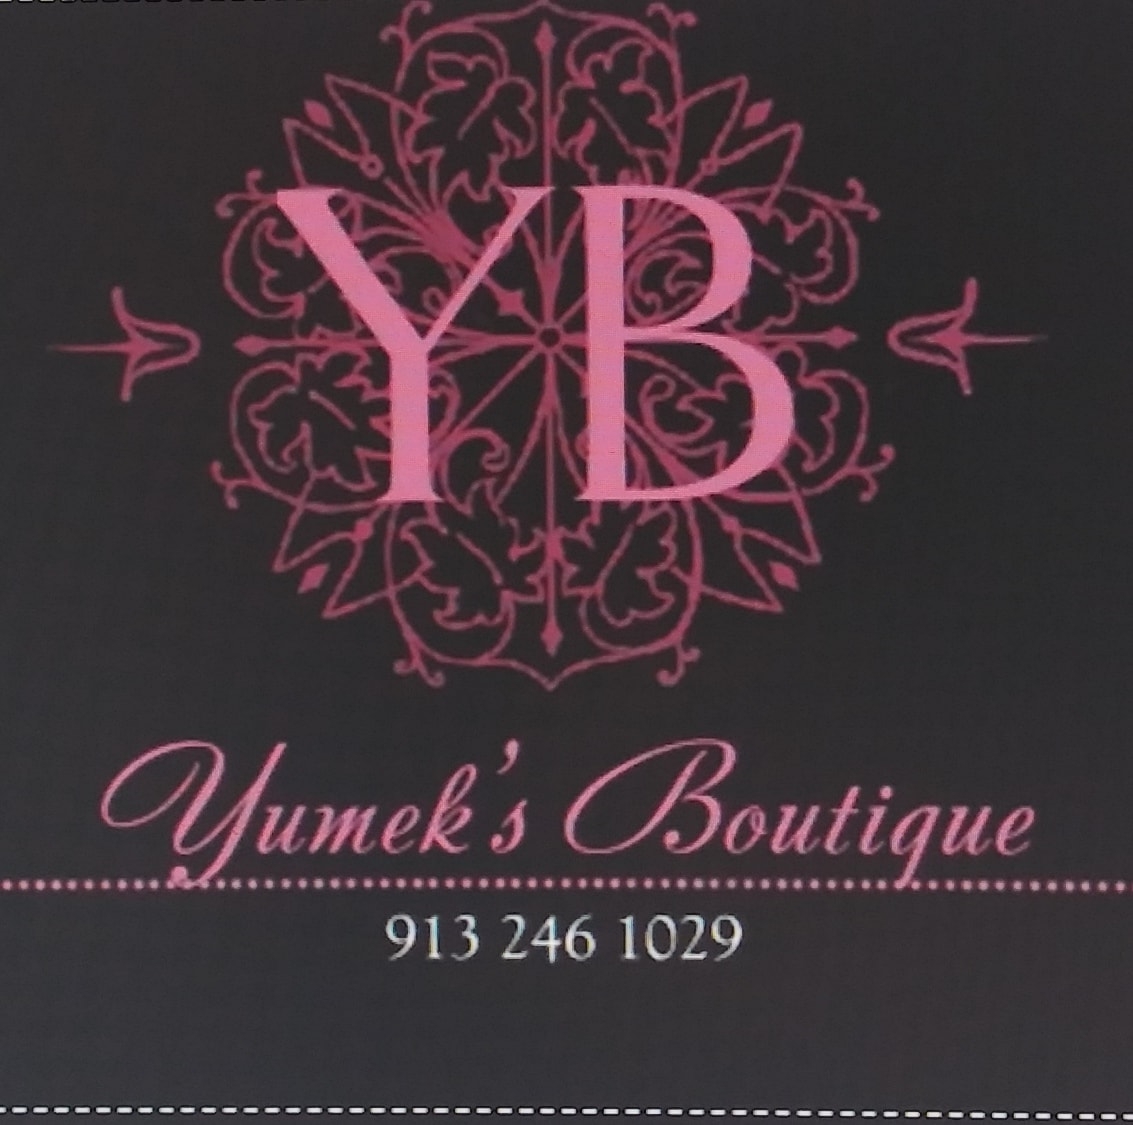 Yumek's Boutique